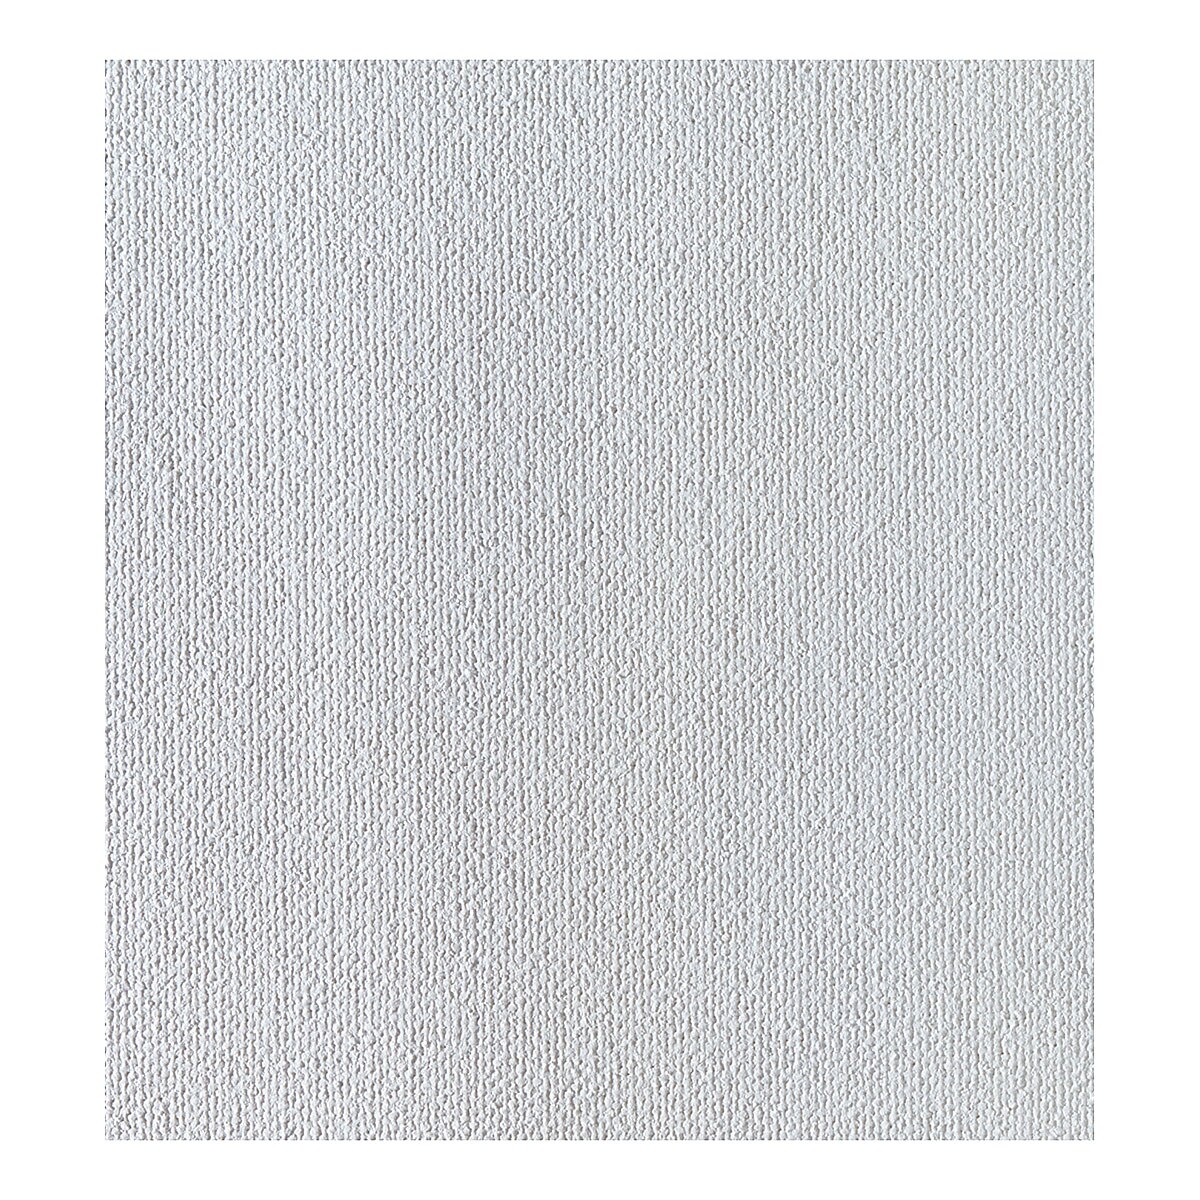 Fredrix Cotton Duck Canvas Roll - 53&#x22; x 3 yards, Acrylic Primed